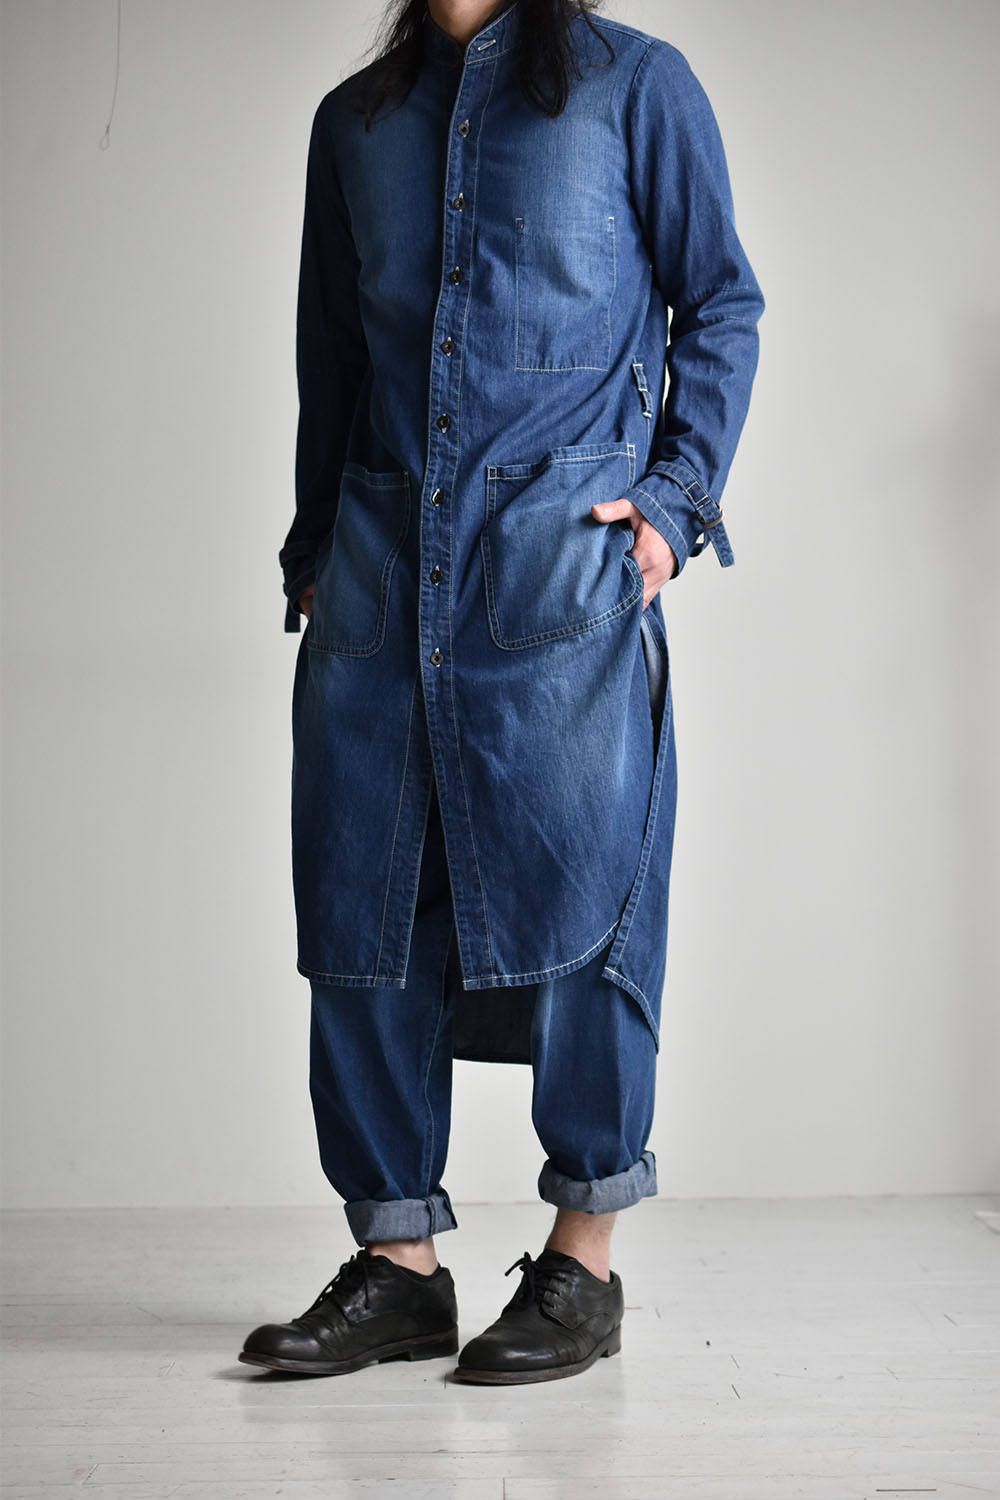 nude:masahiko maruyama - Denim Long Shirt Jaket